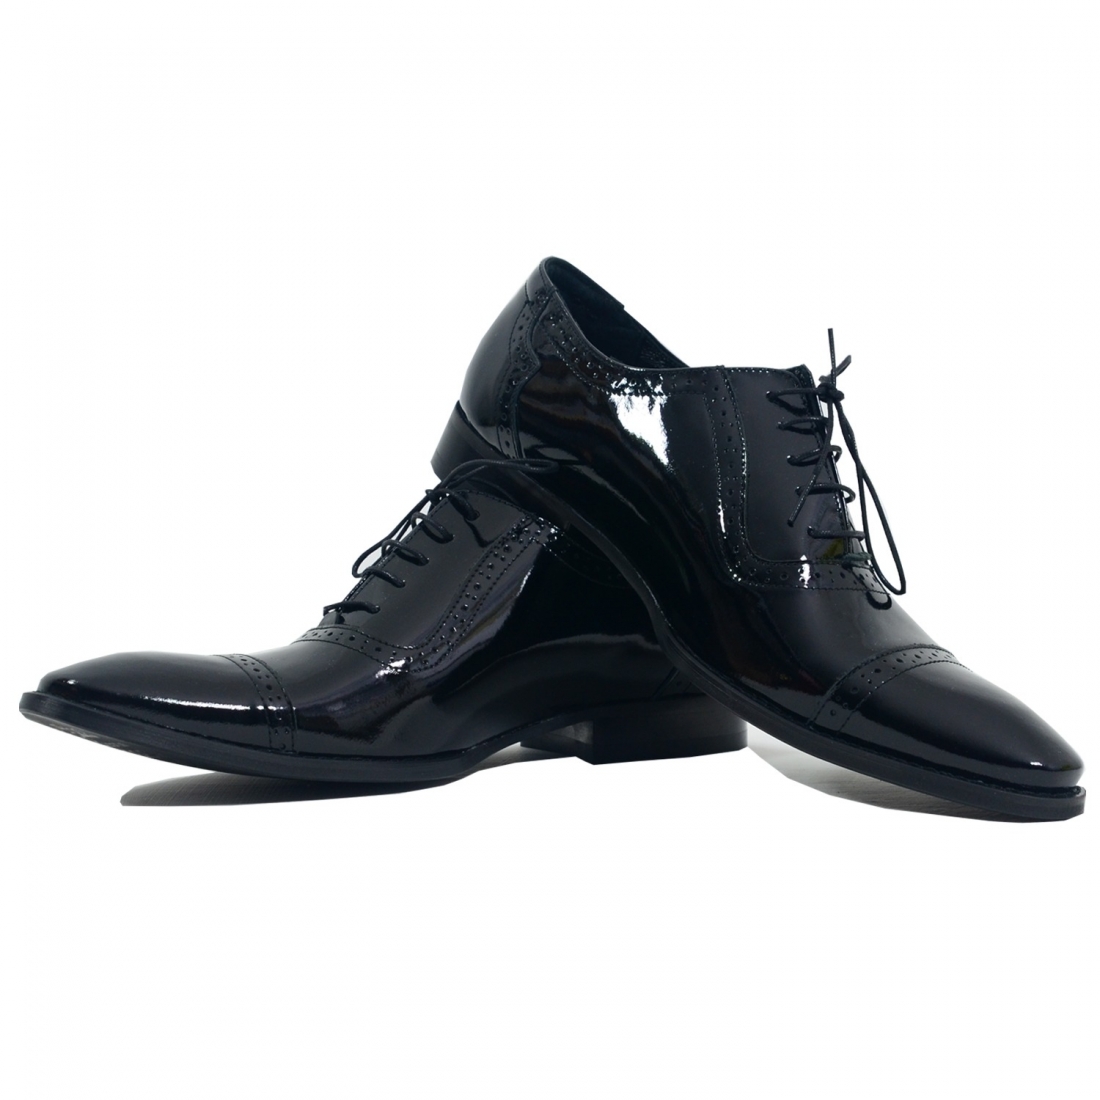 Modello Atmoe - Classic Shoes - Handmade Colorful Italian Leather Shoes